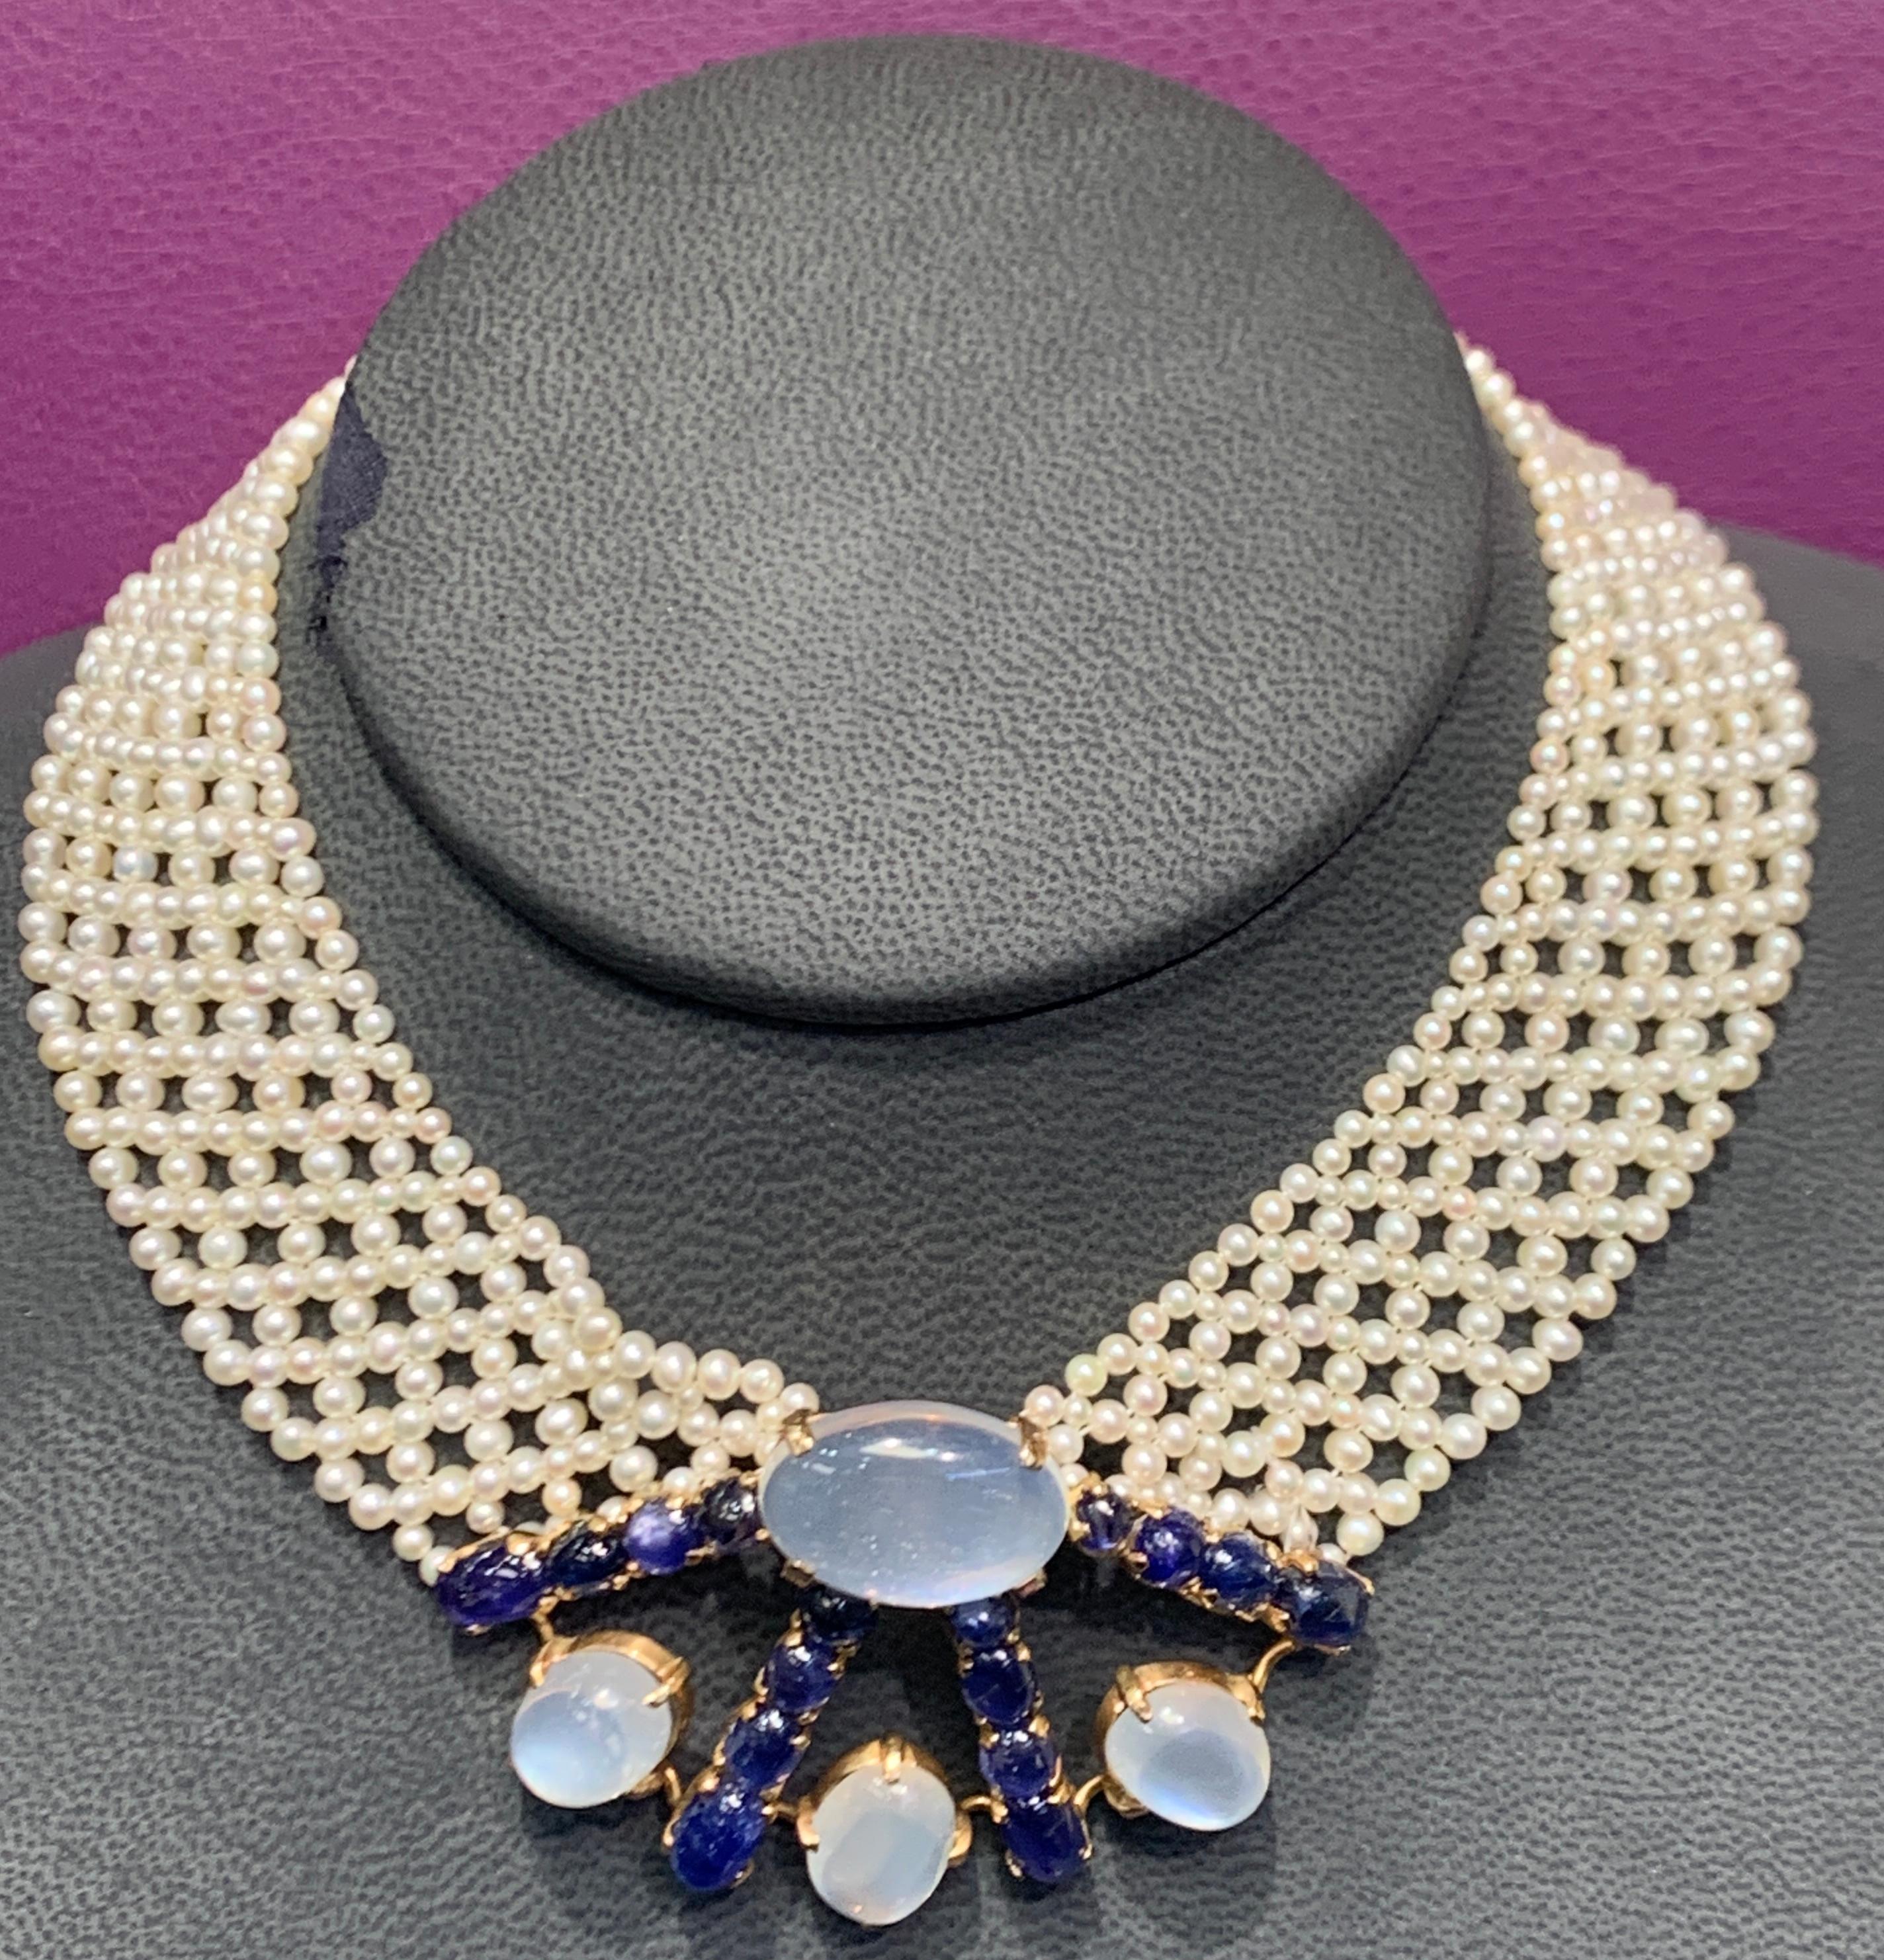  Cultured Pearl & Cabochon Gem Choker 
16 cabochon blue sapphires, & 4 cabochon moon stone
Necklace Measurements: 13